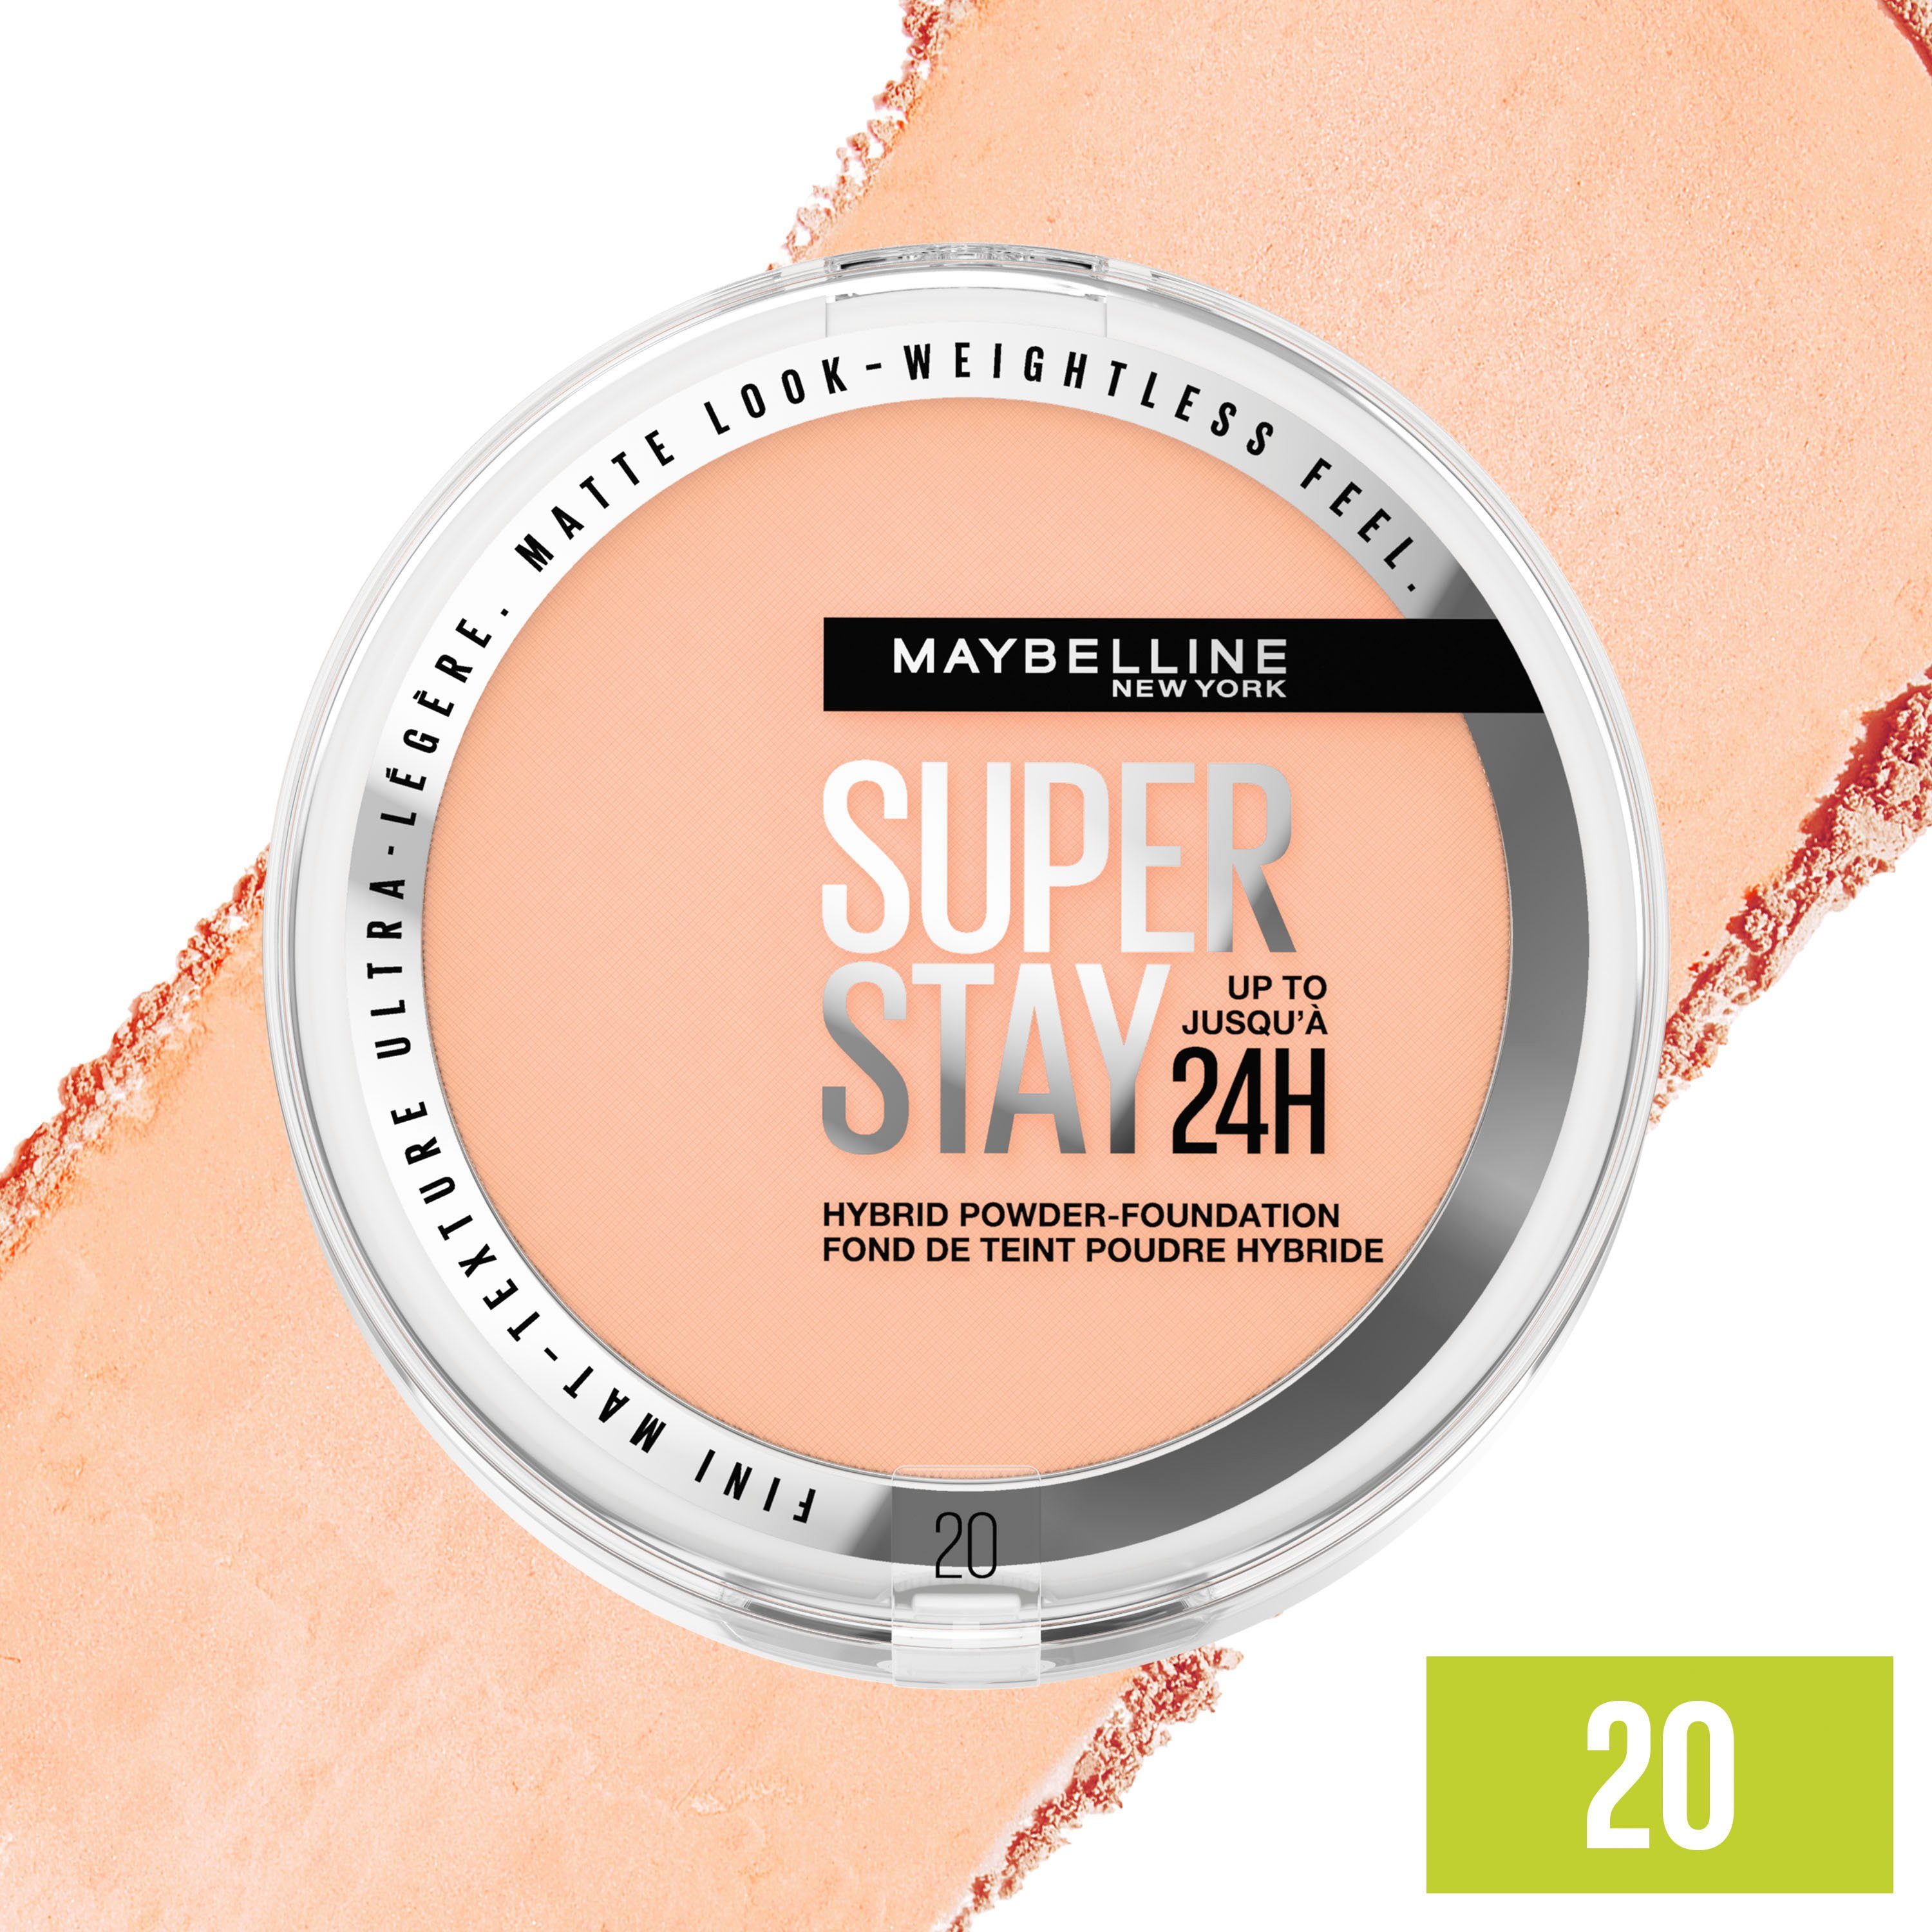 Puder York Super Make-Up MAYBELLINE Hybrides Maybelline Stay NEW YORK Foundation New